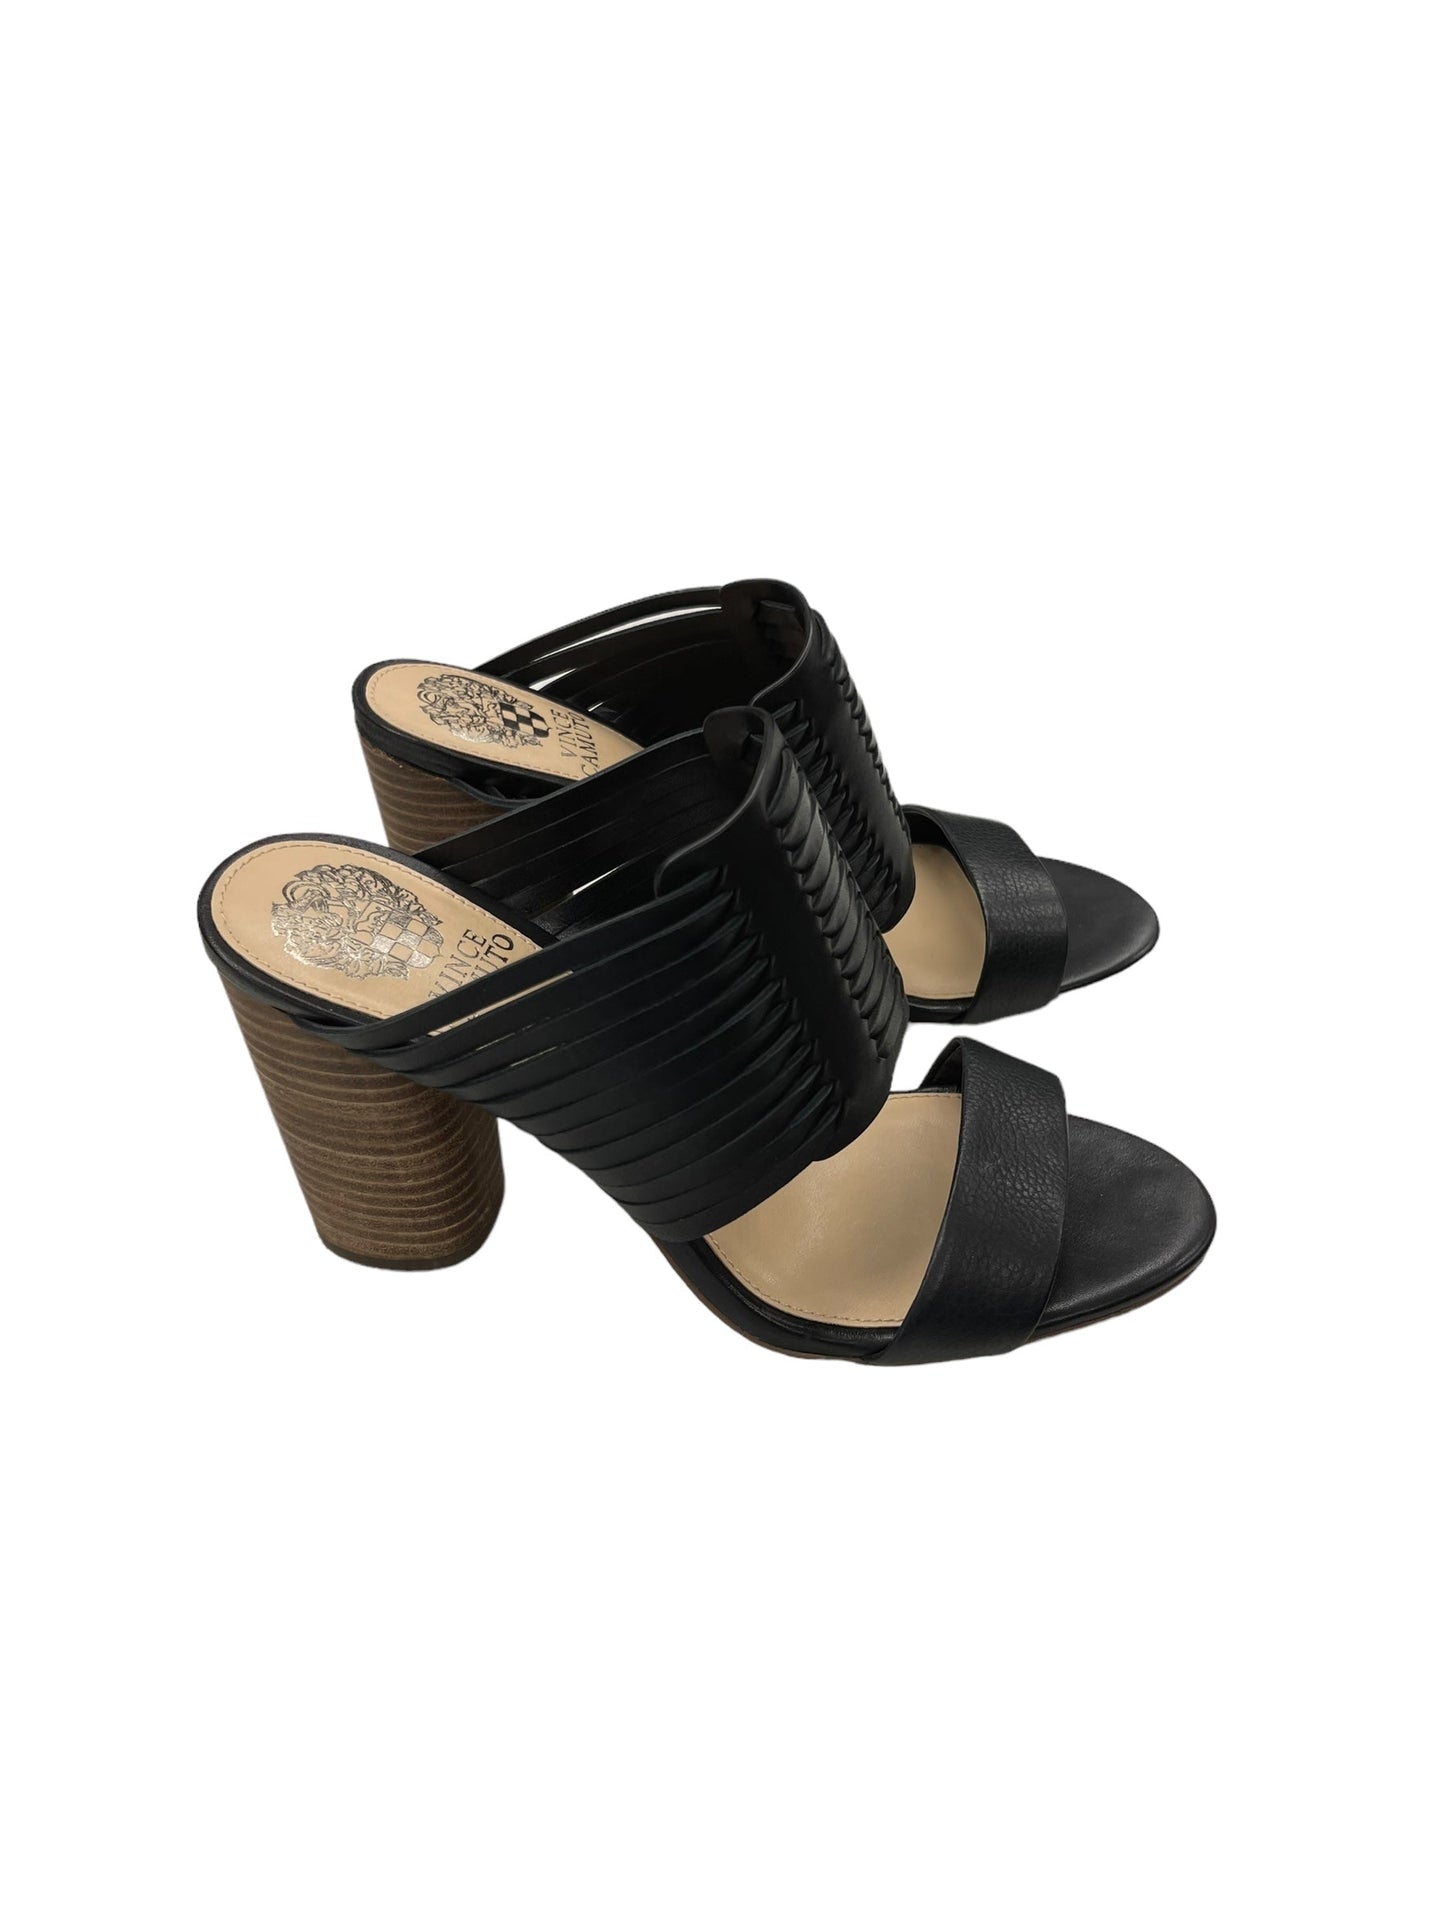 Sandals Heels Block By Franco Sarto  Size: 7.5